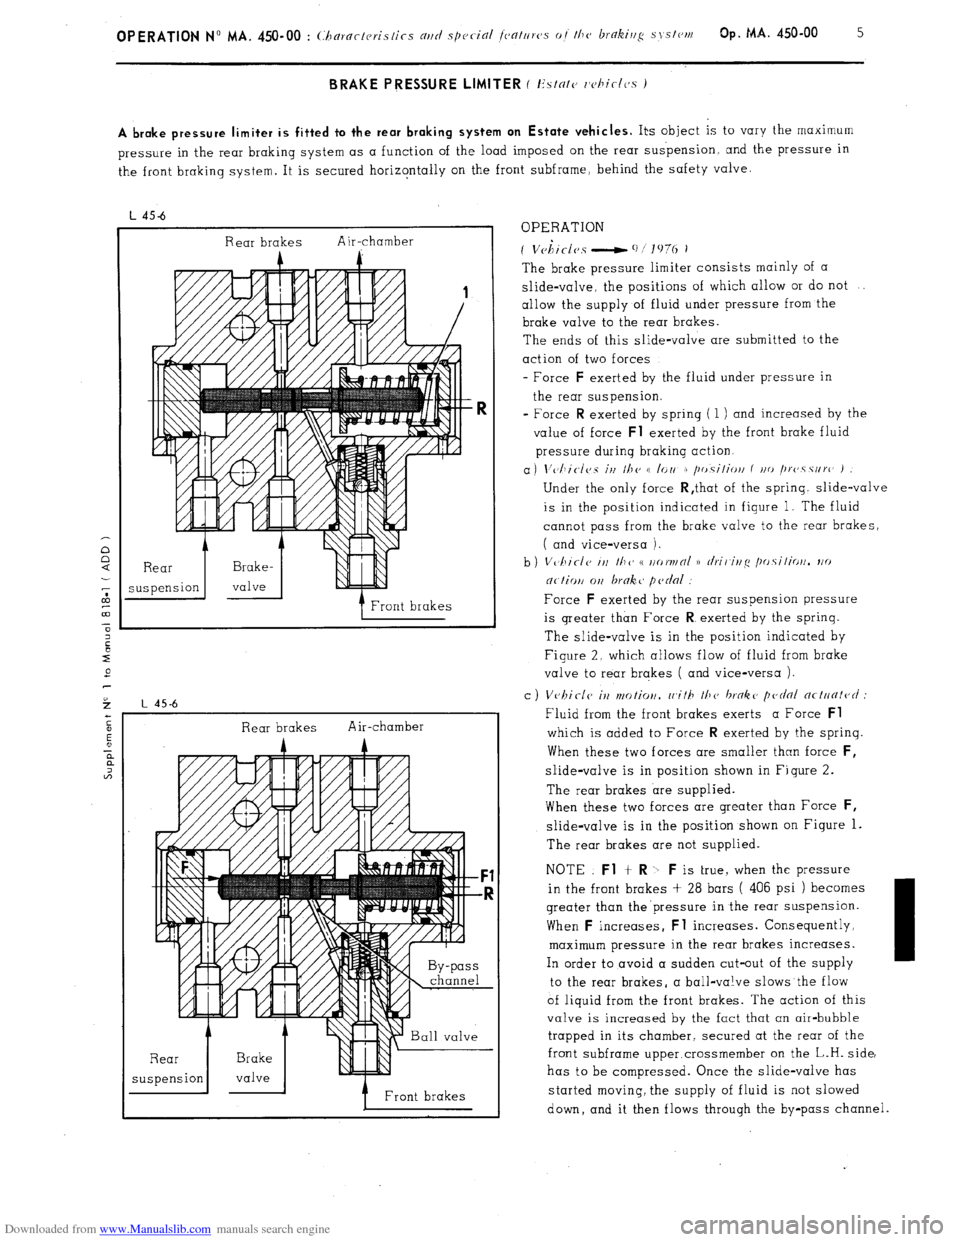 Citroen CX 1982 1.G User Guide Downloaded from www.Manualslib.com manuals search engine OPERATION No MA. 450-00 : Ch nrnclcrislics ortd sp~~c-i~l (c~c~trlrc>s 01 the hokiug S SI~IN Op. MA. 450.00 5 
A brake pressure limiter is fitt